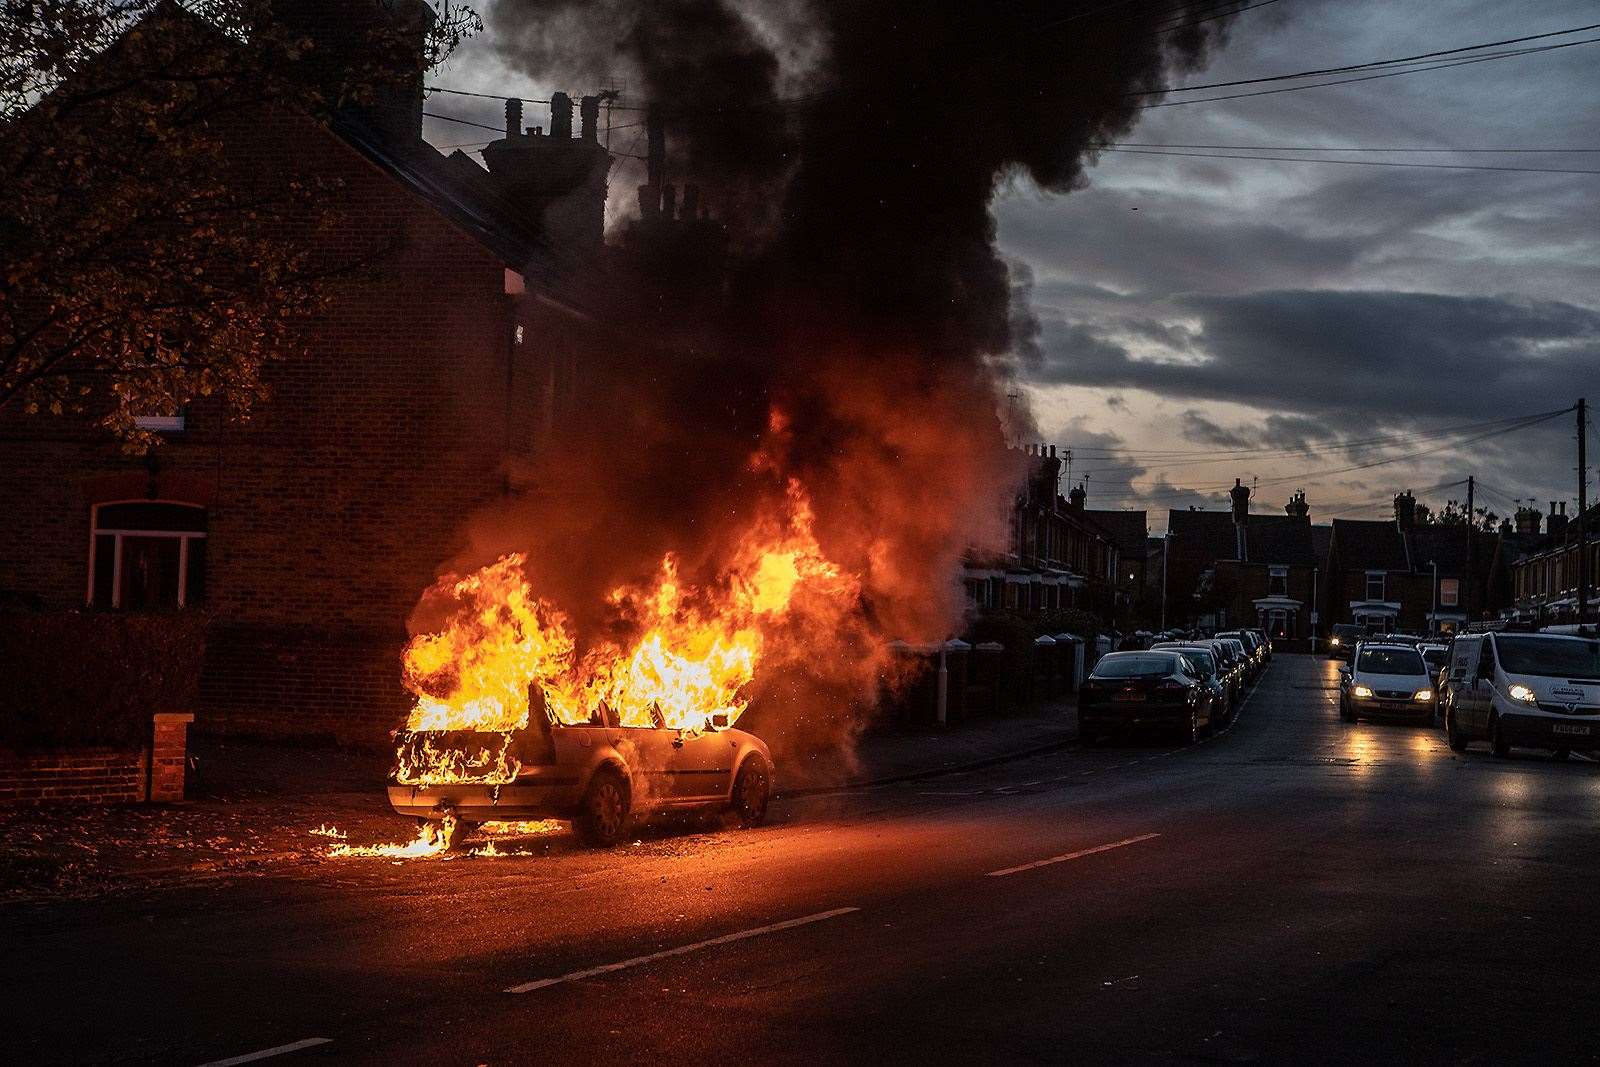 A car burst into flames in Briton Street, Faversham. Pic: @mrperou